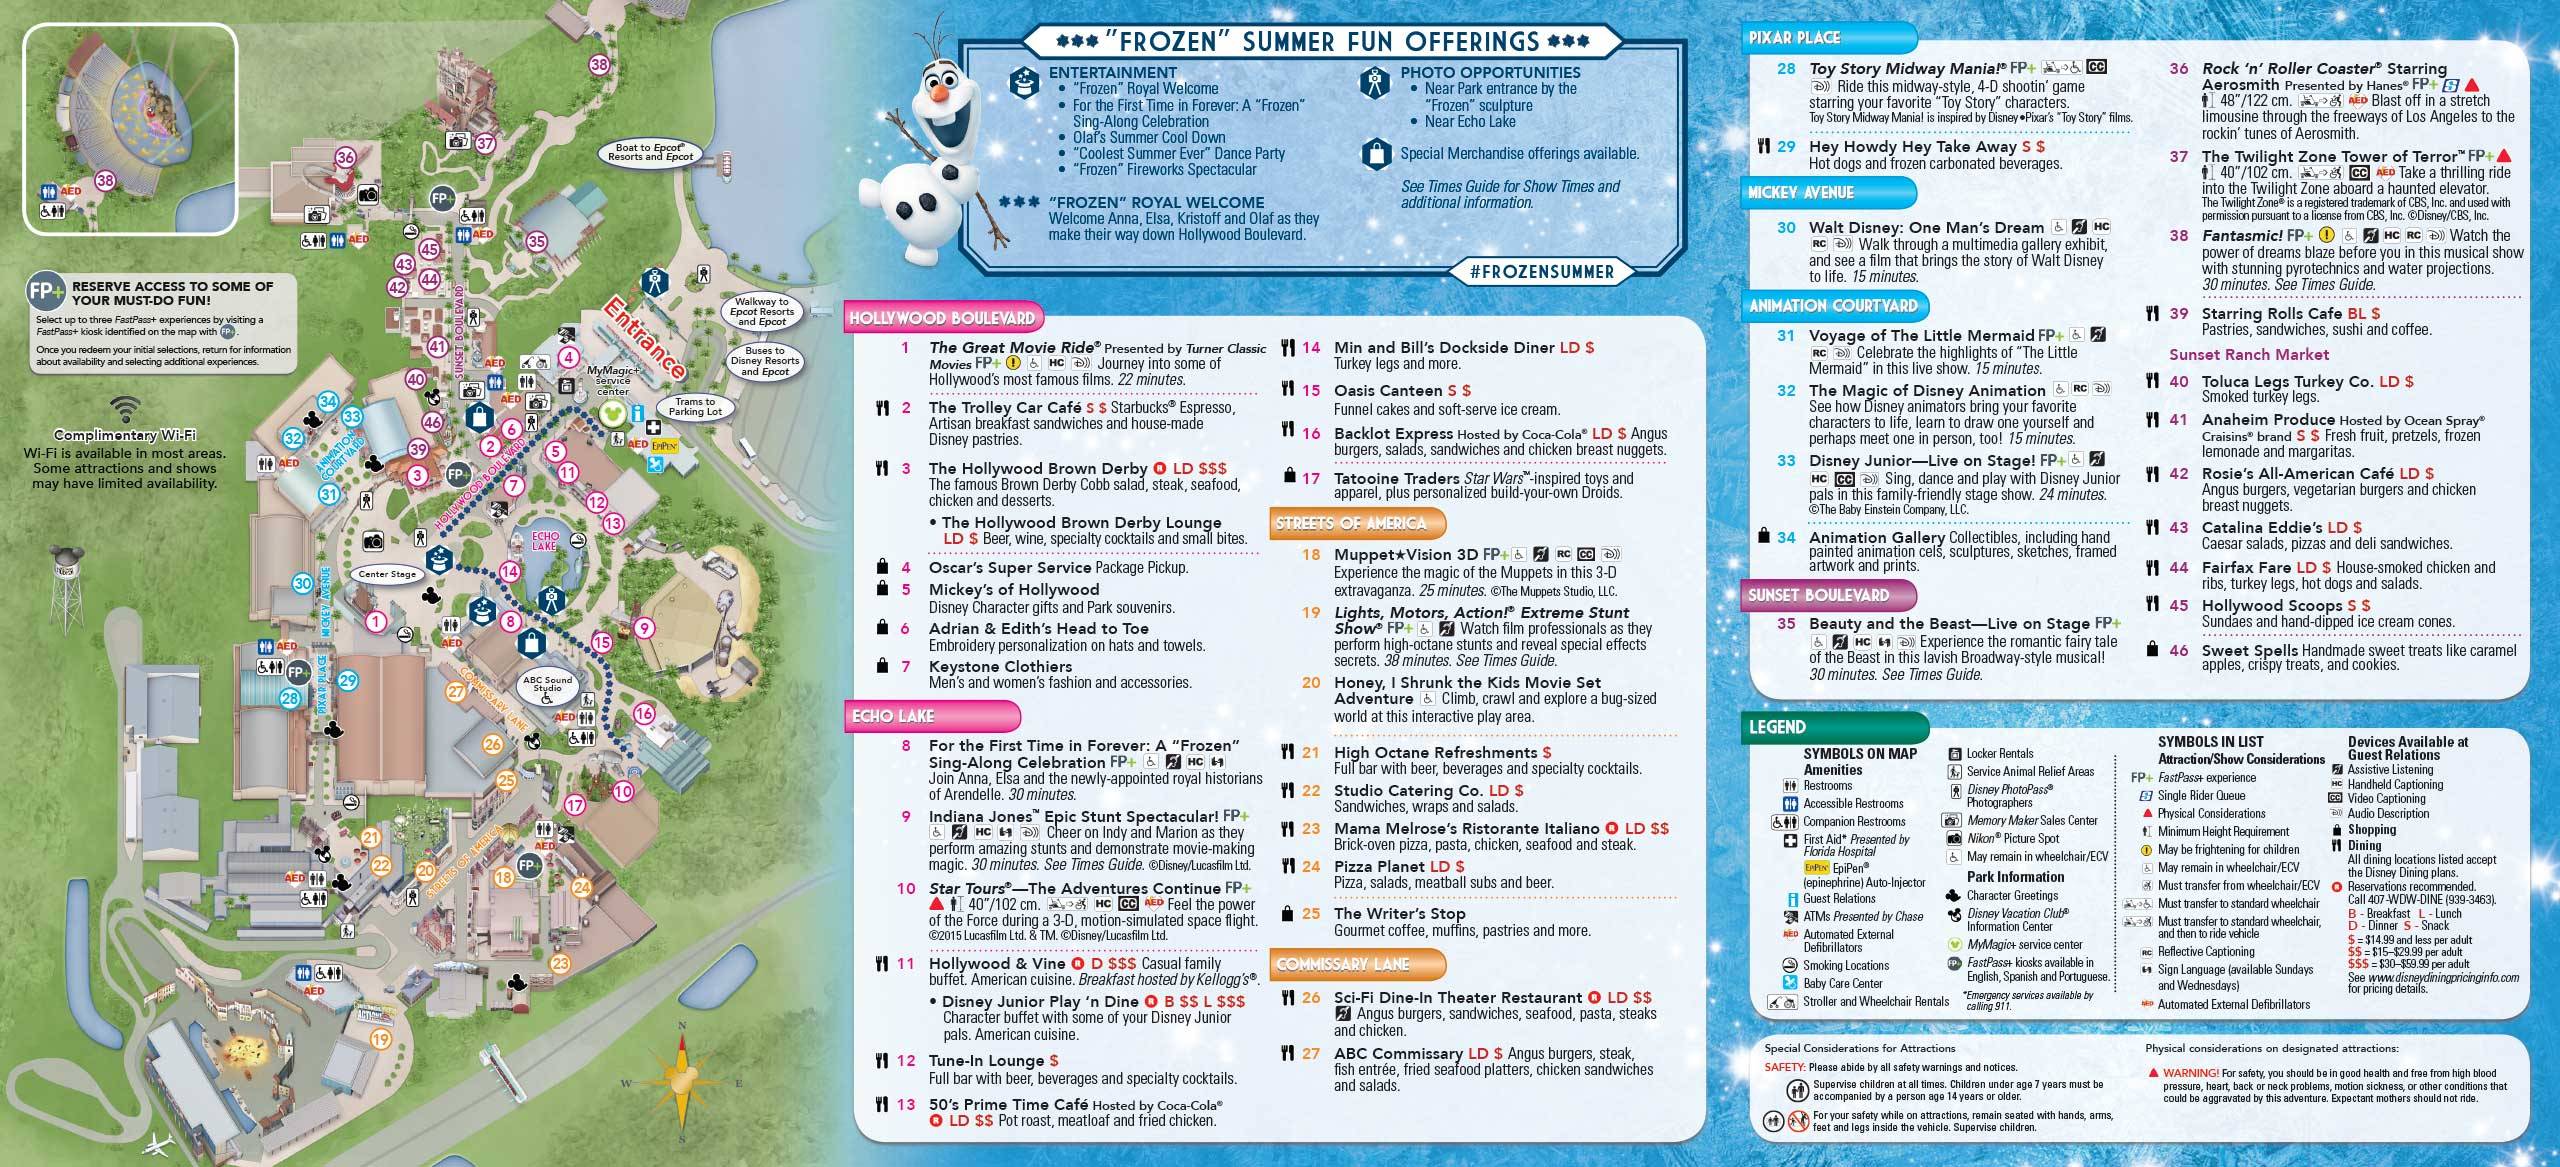 Disney's Hollywood Studios Guide Map May 2015 - Back